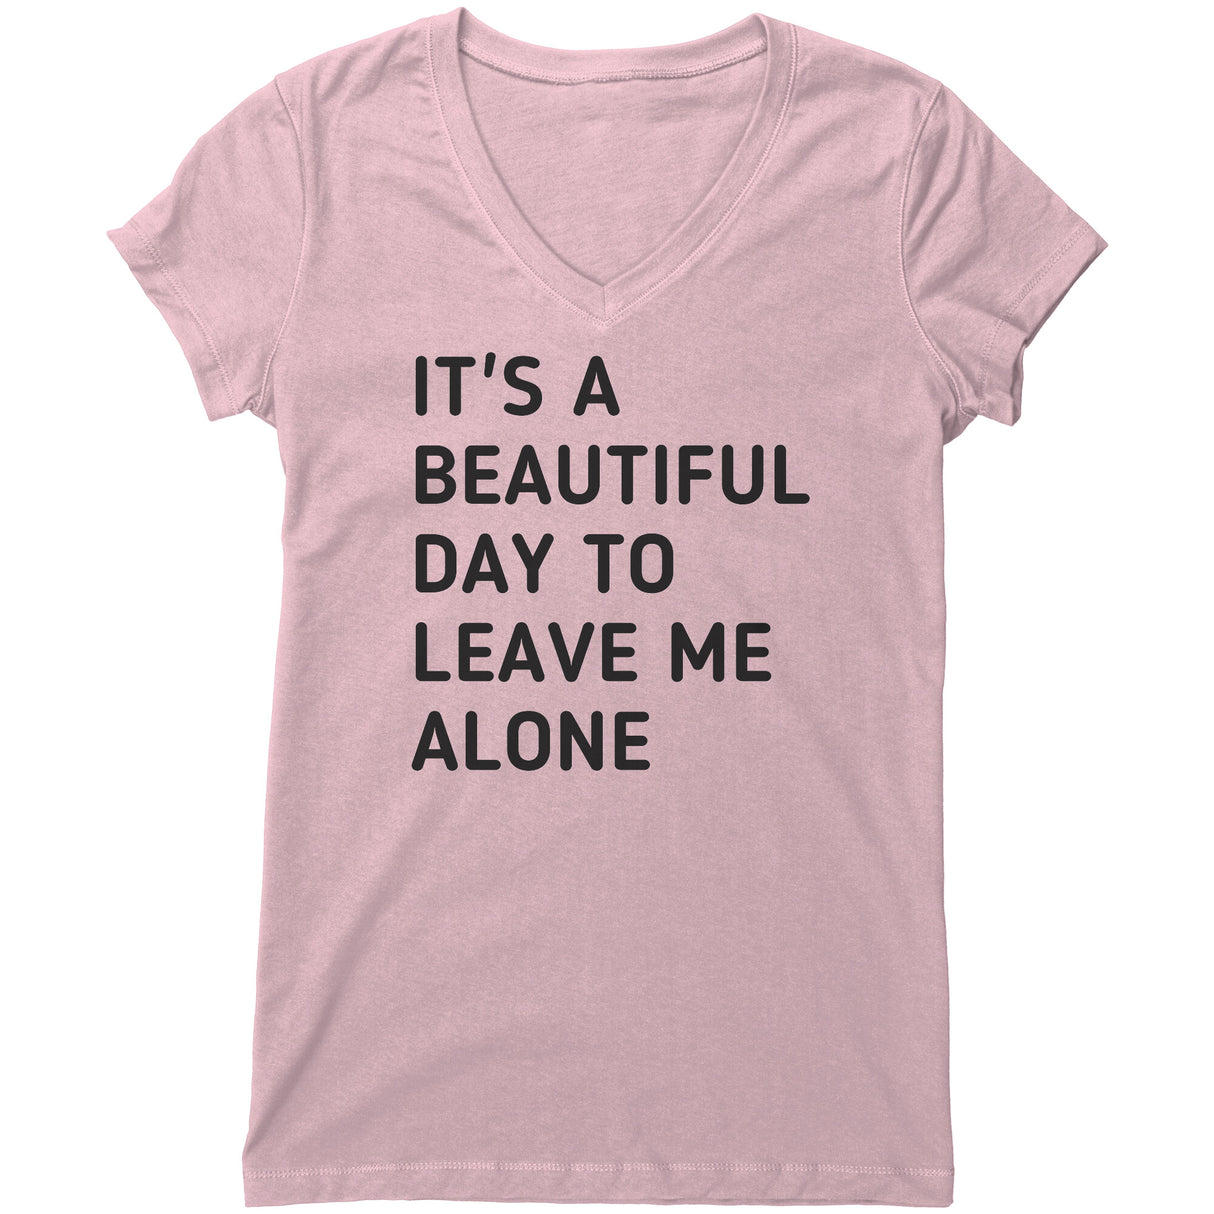 "Leave Me Alone" V-neck Shirt